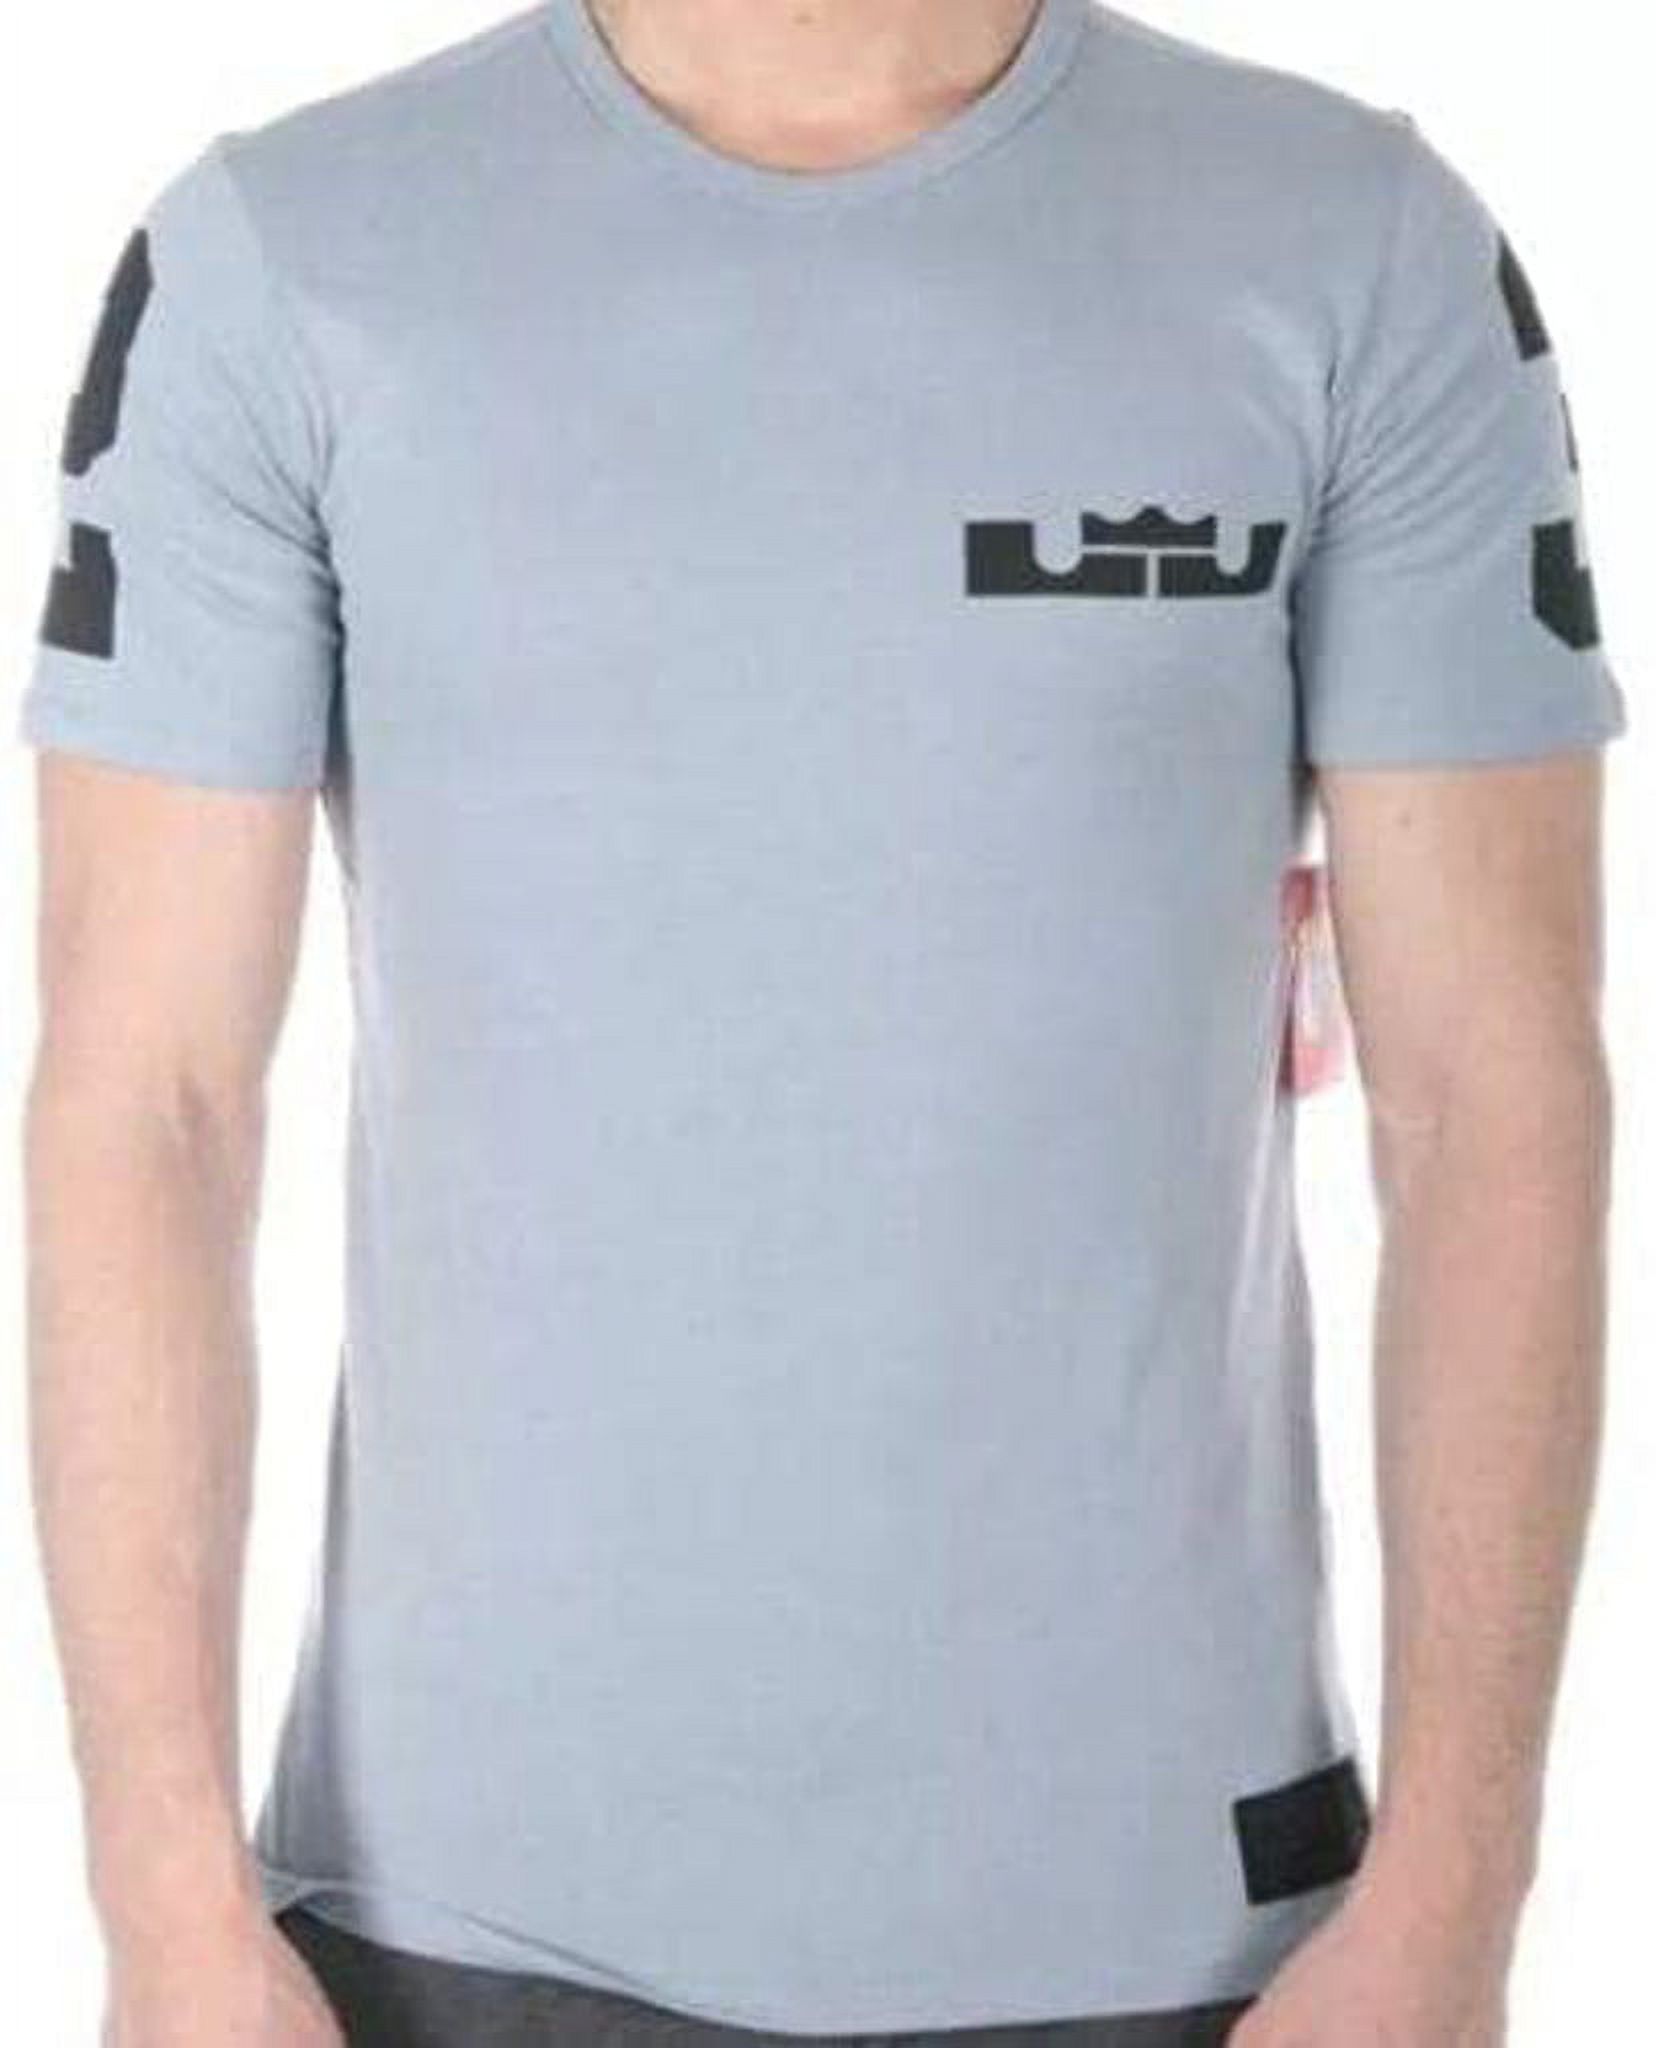 Nike Mens Lebron Miami Print T-Shirt - image 1 of 3